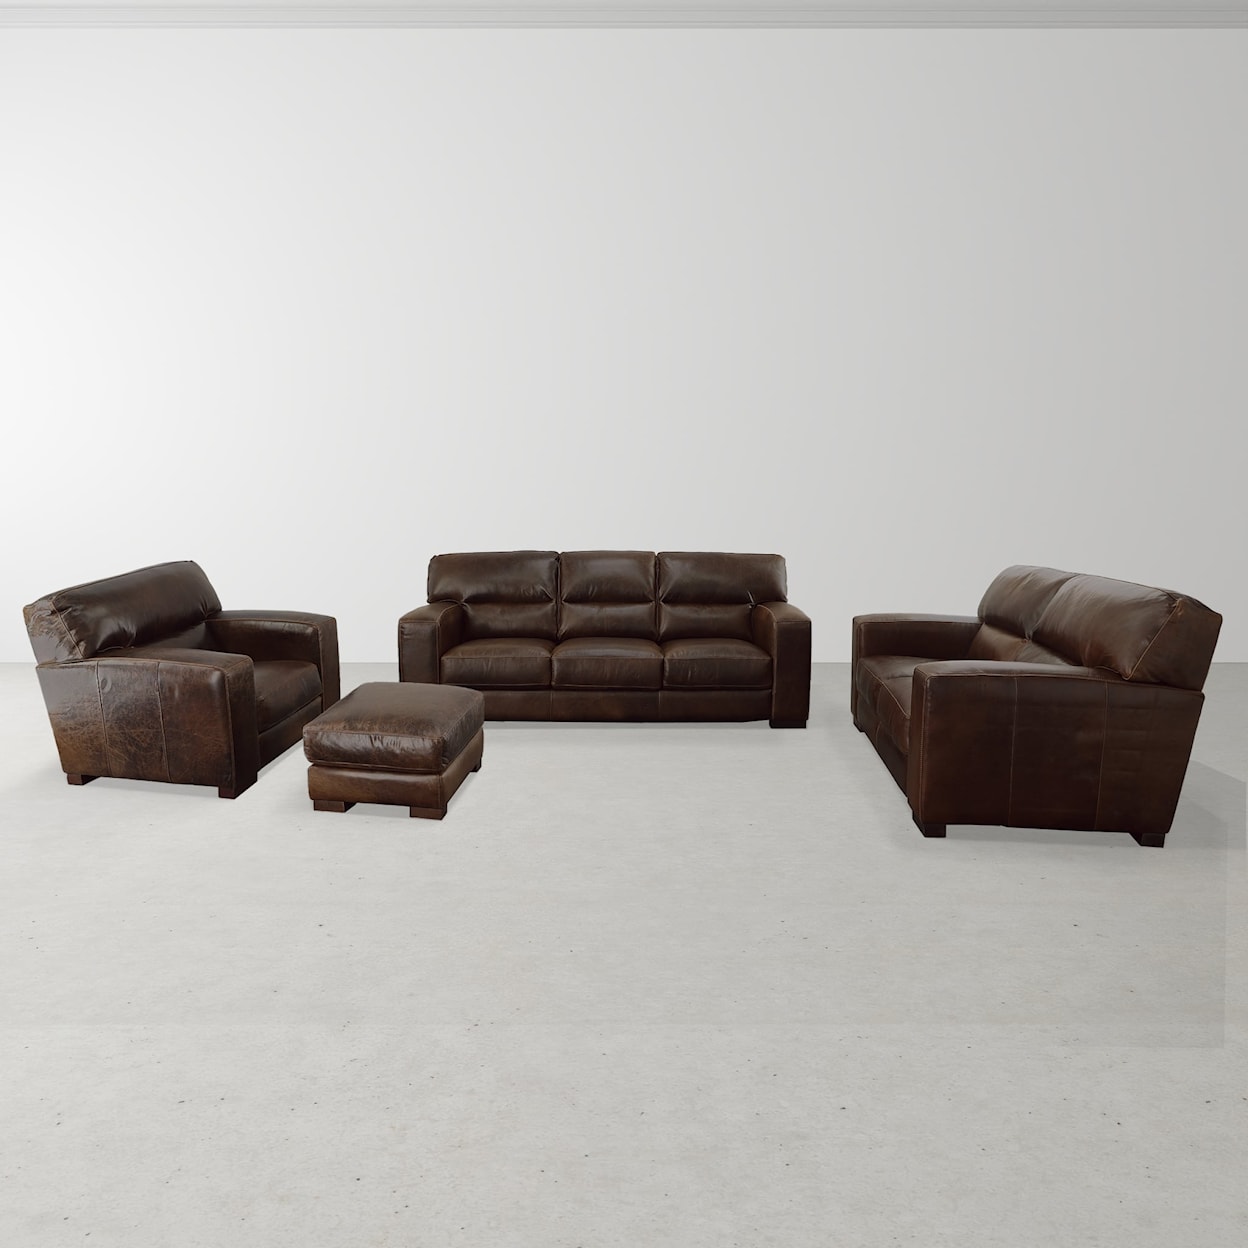 Virginia Furniture Market Premium Leather Brescia Four Piece Living Room Group